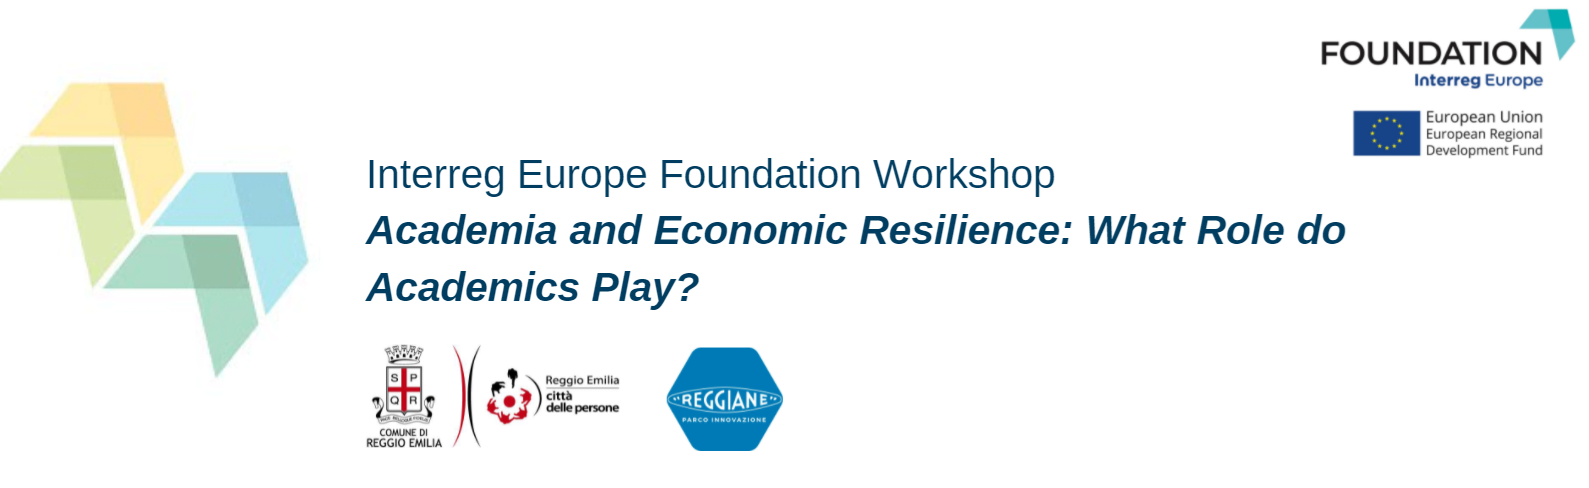 Webinar on Academia and Economic Resilience